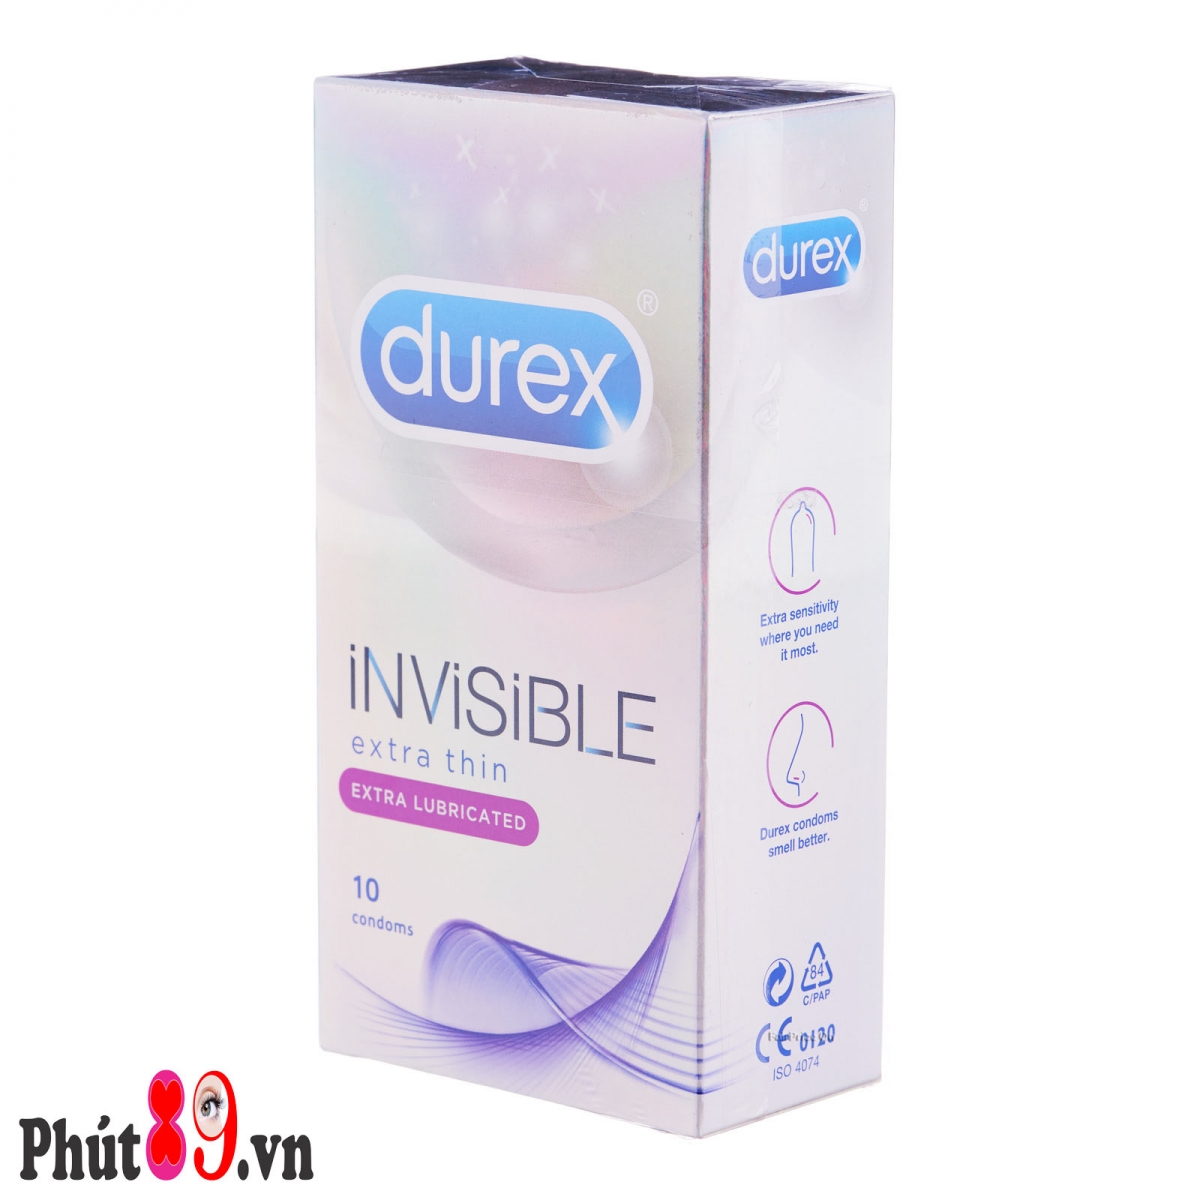 durex invisible extra lubricated 10 cái